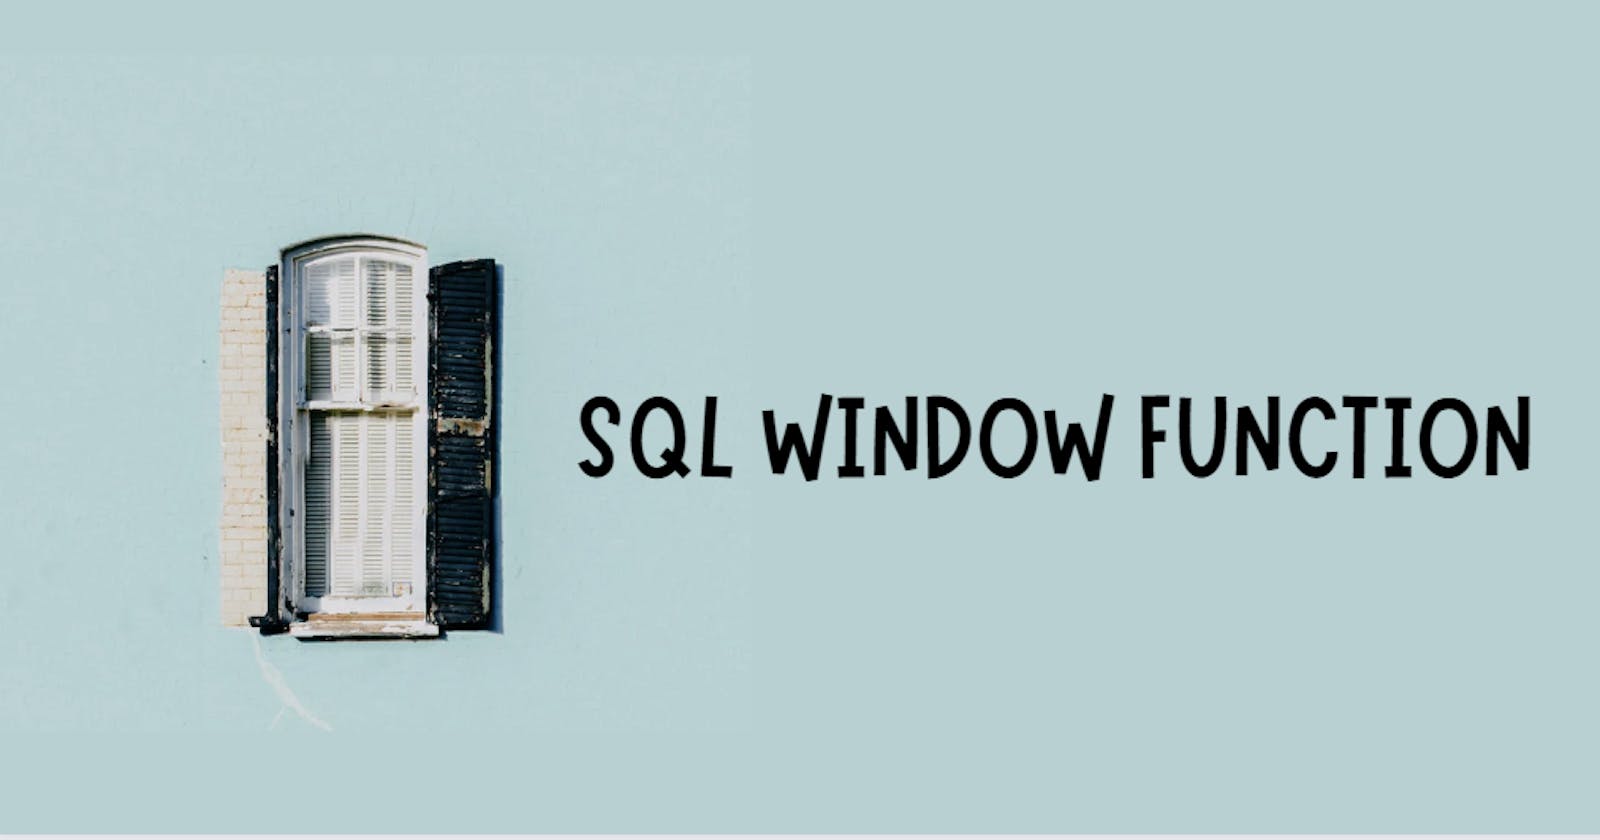 Window framing in SQL window function.